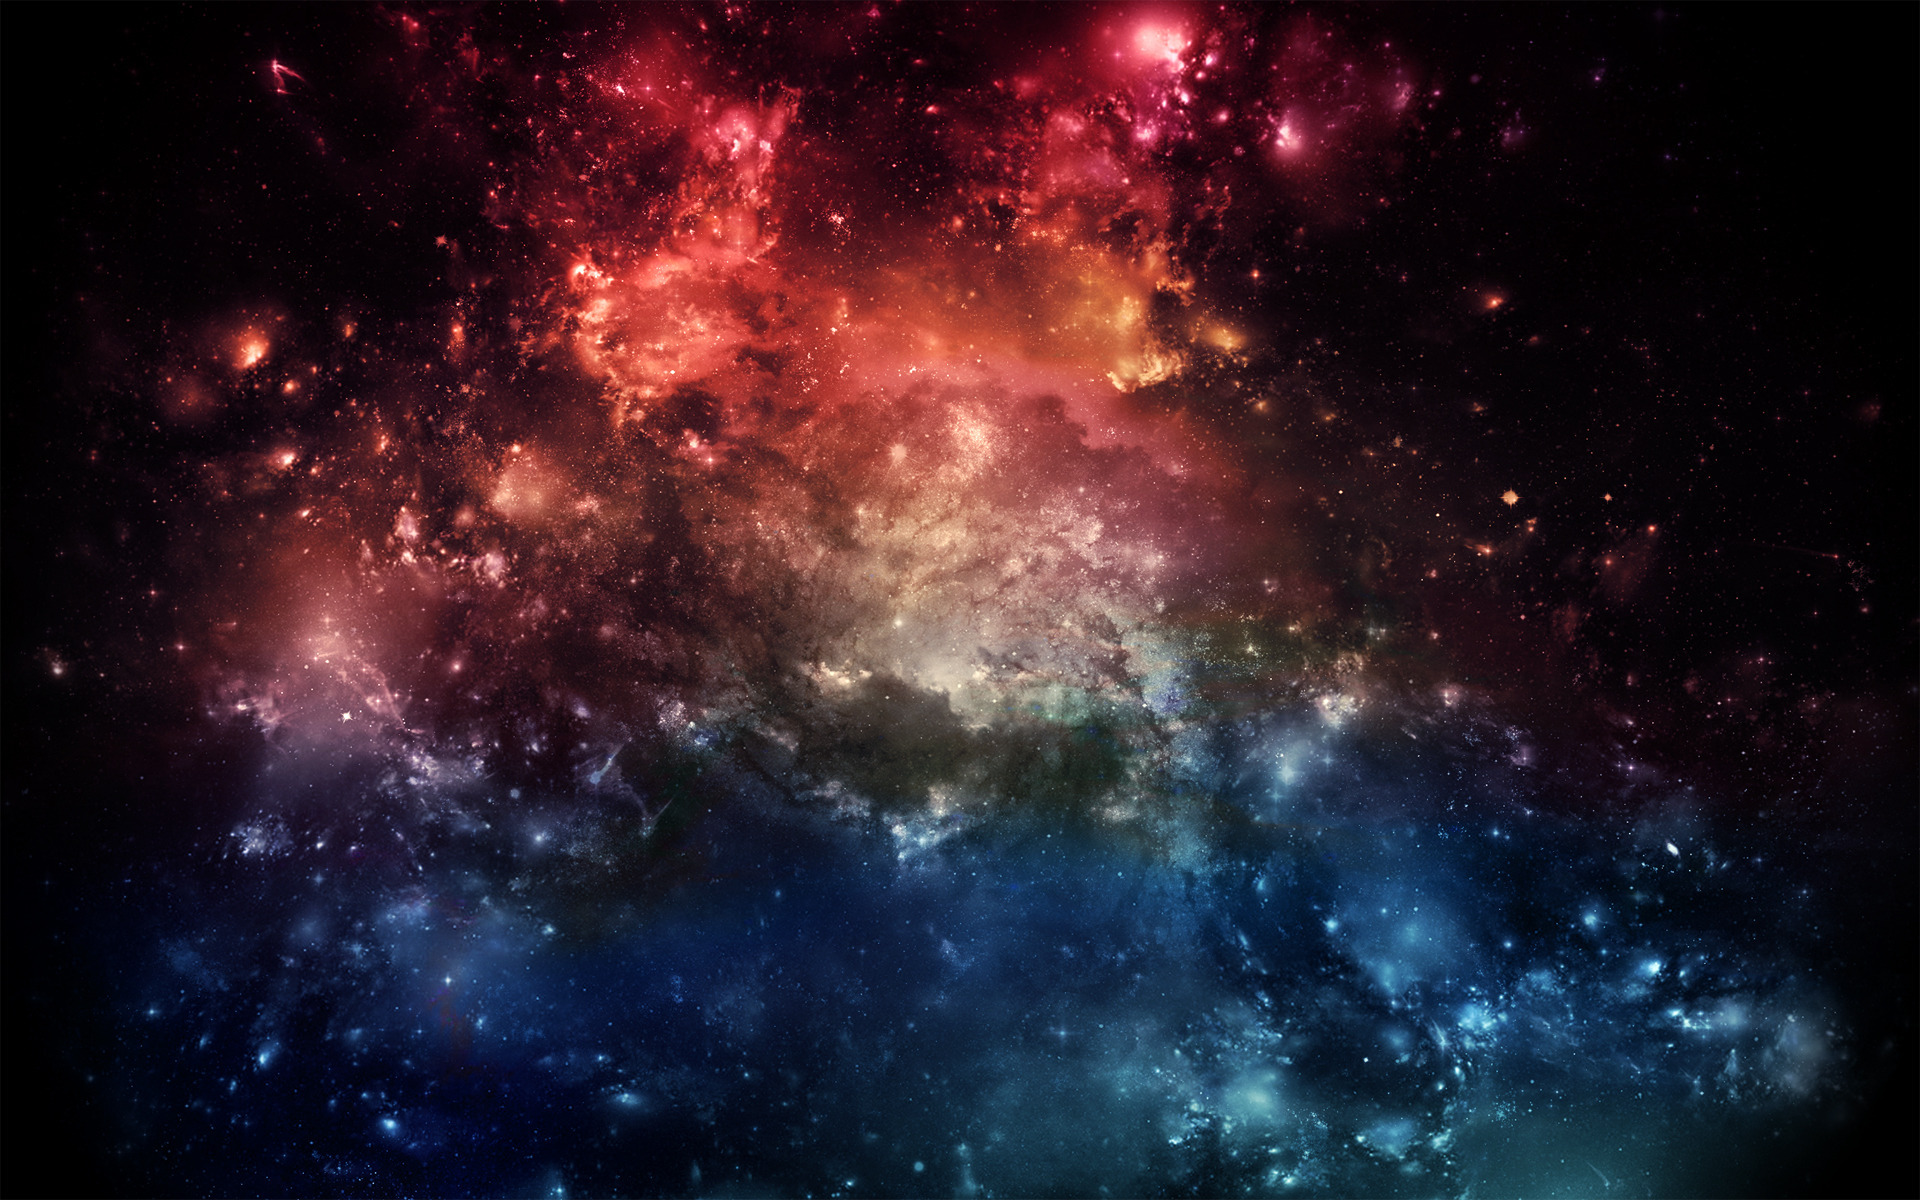 tumblr backgrounds galaxy | galaxy wallpaper tumblr hd wallpapers